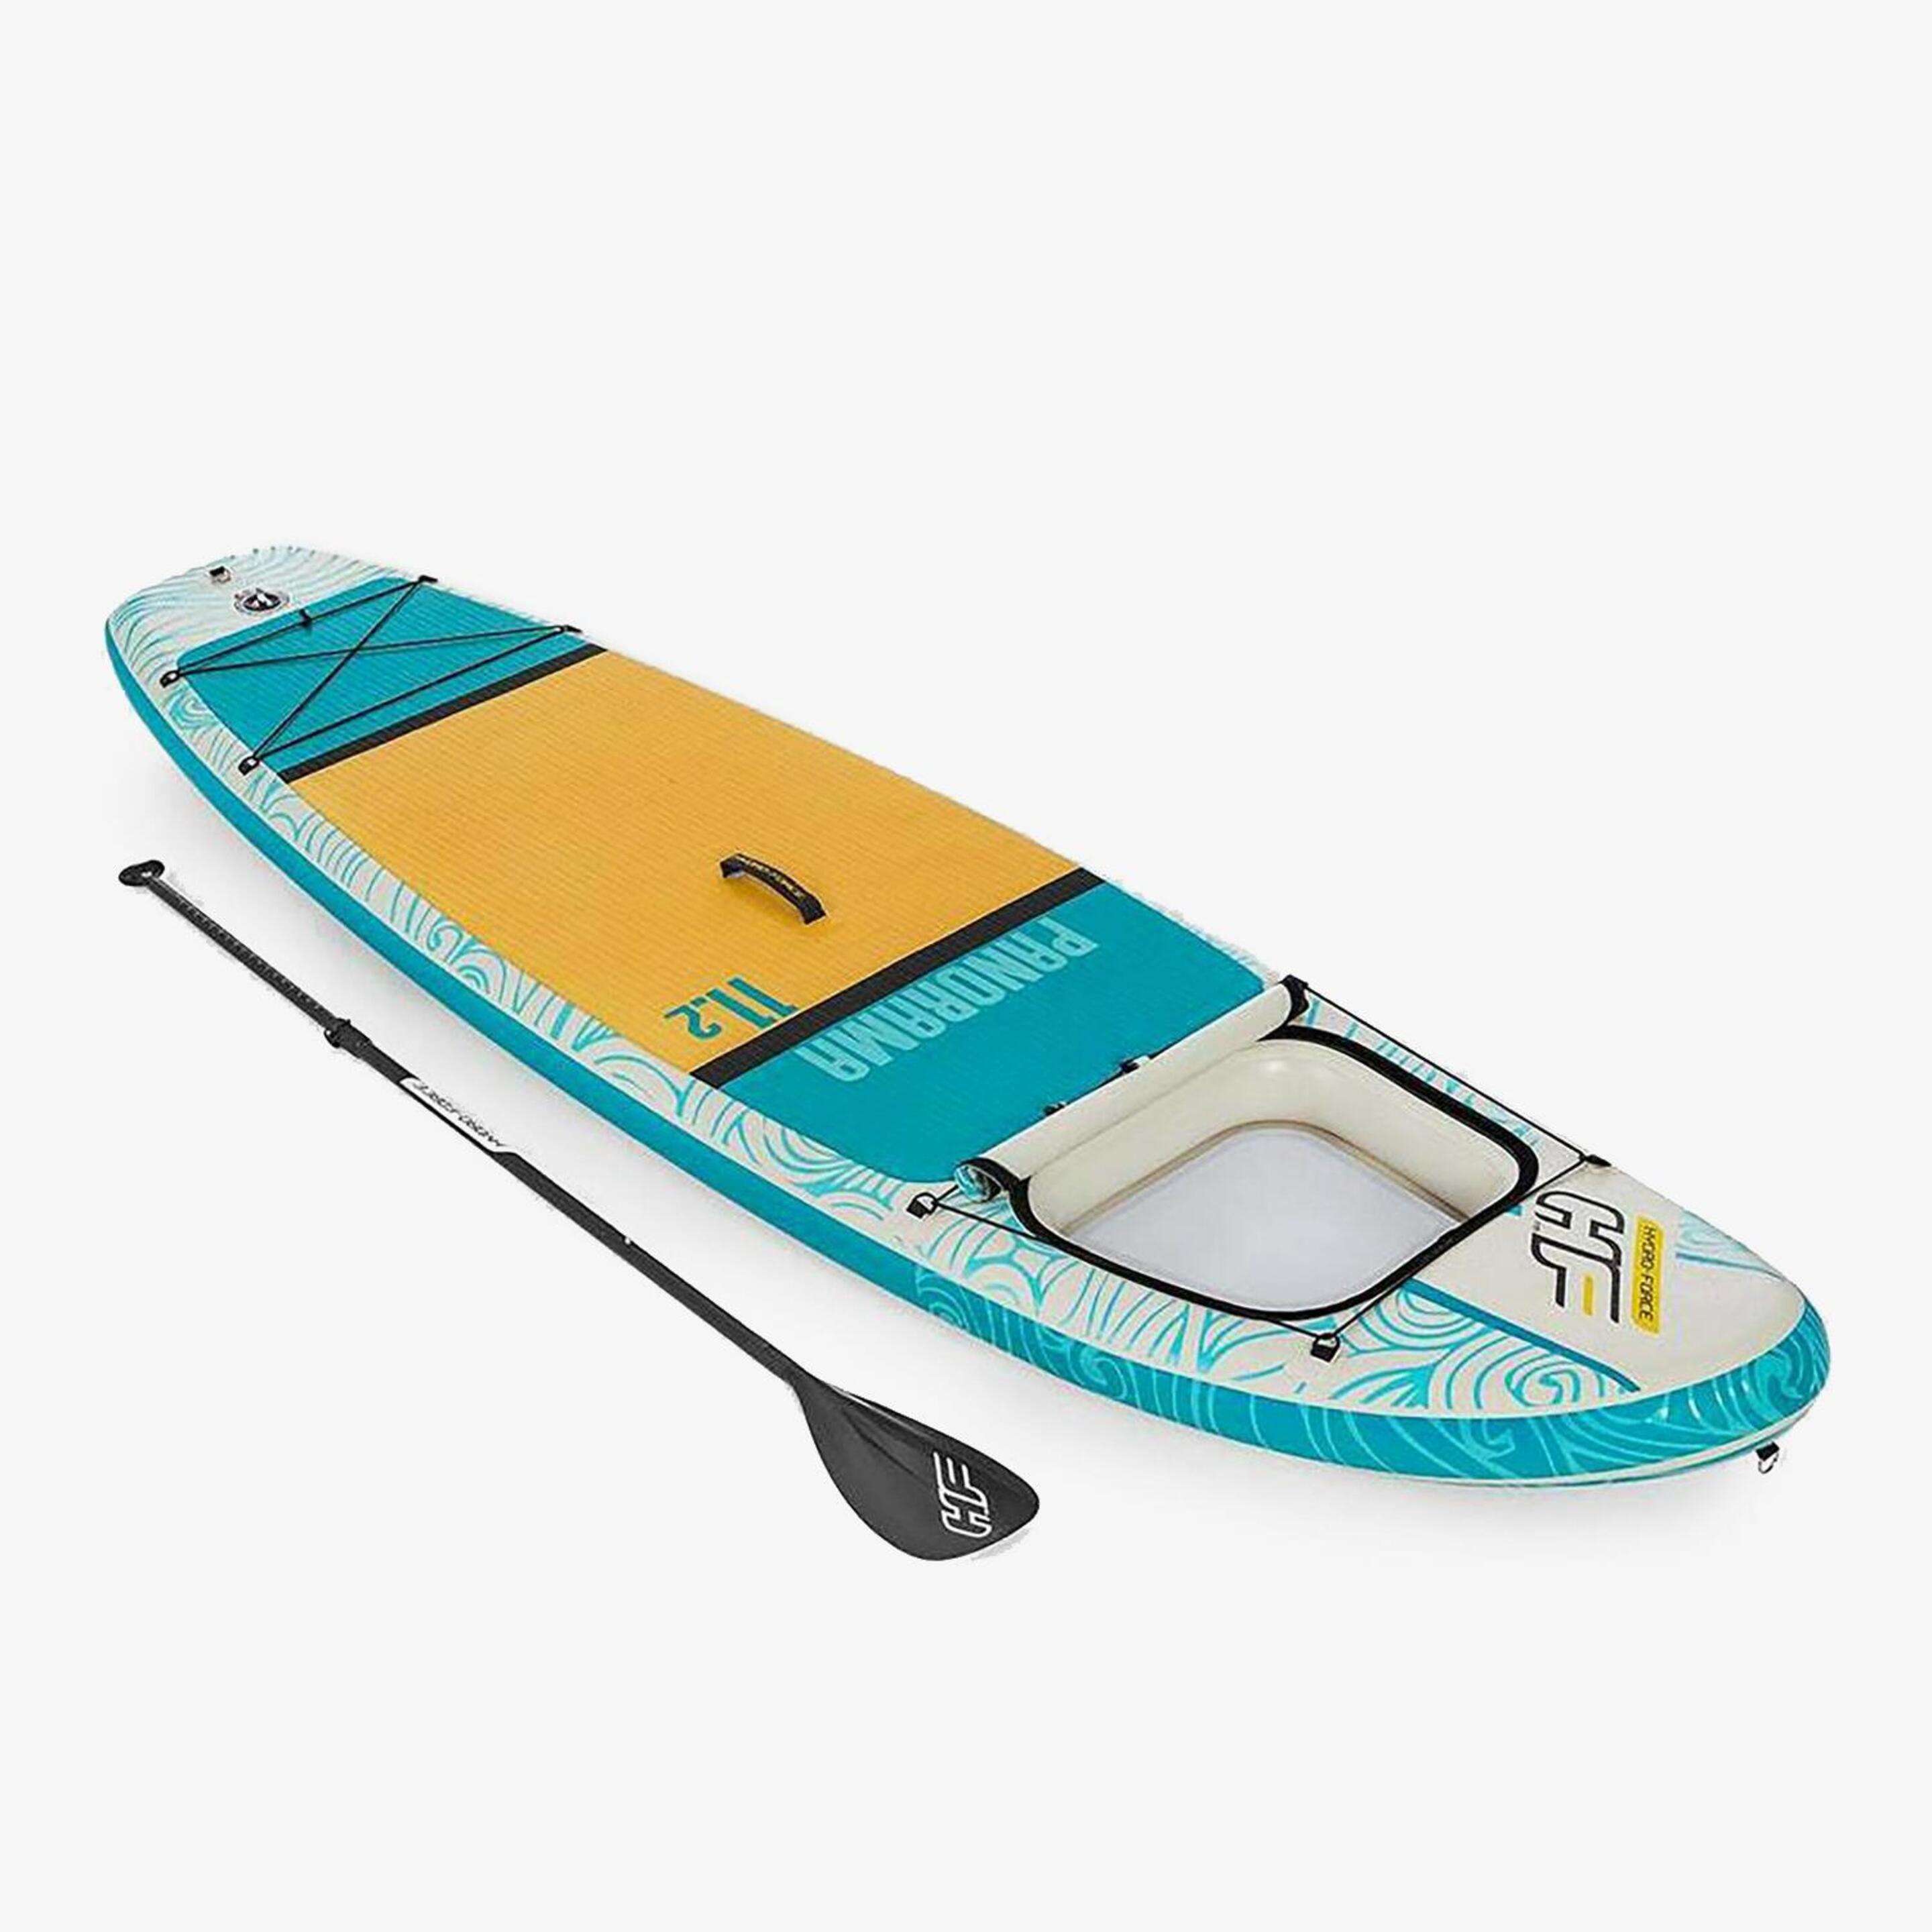 Hydro Force Panorama - - Tabla Paddle Surf  MKP